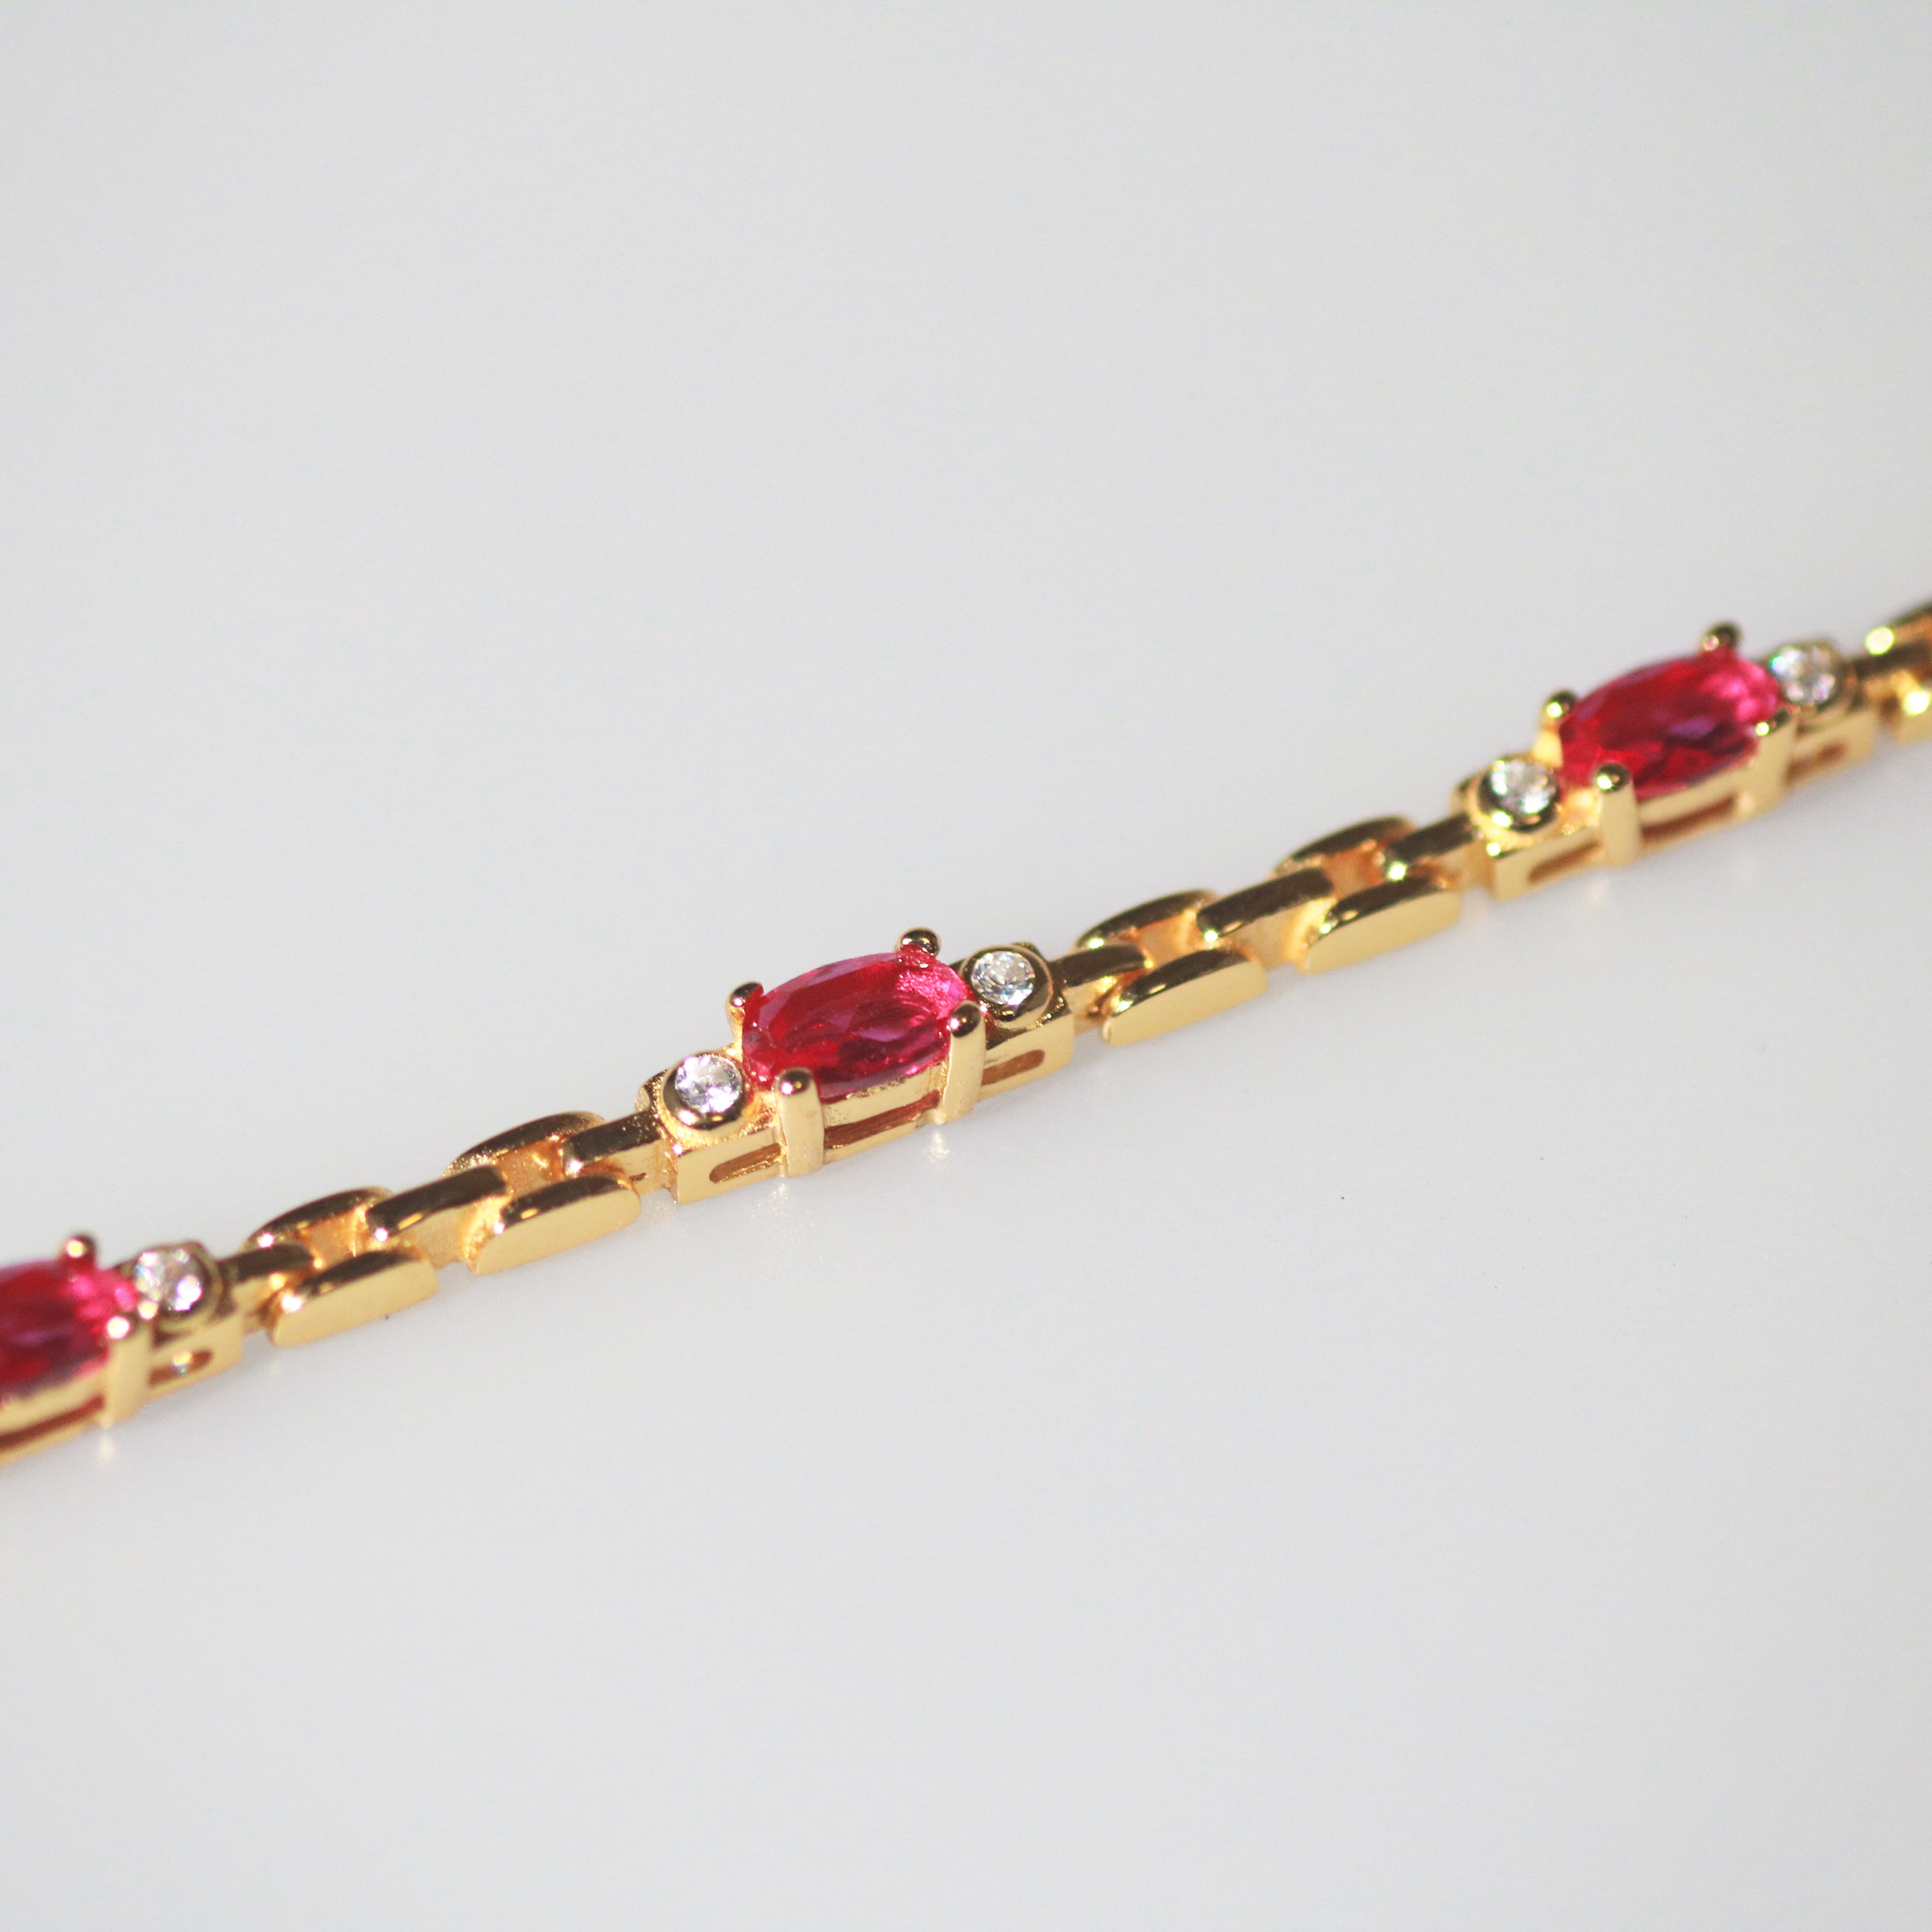 Meideya jewelry gold vermeil garnet bracelet with watch strap design